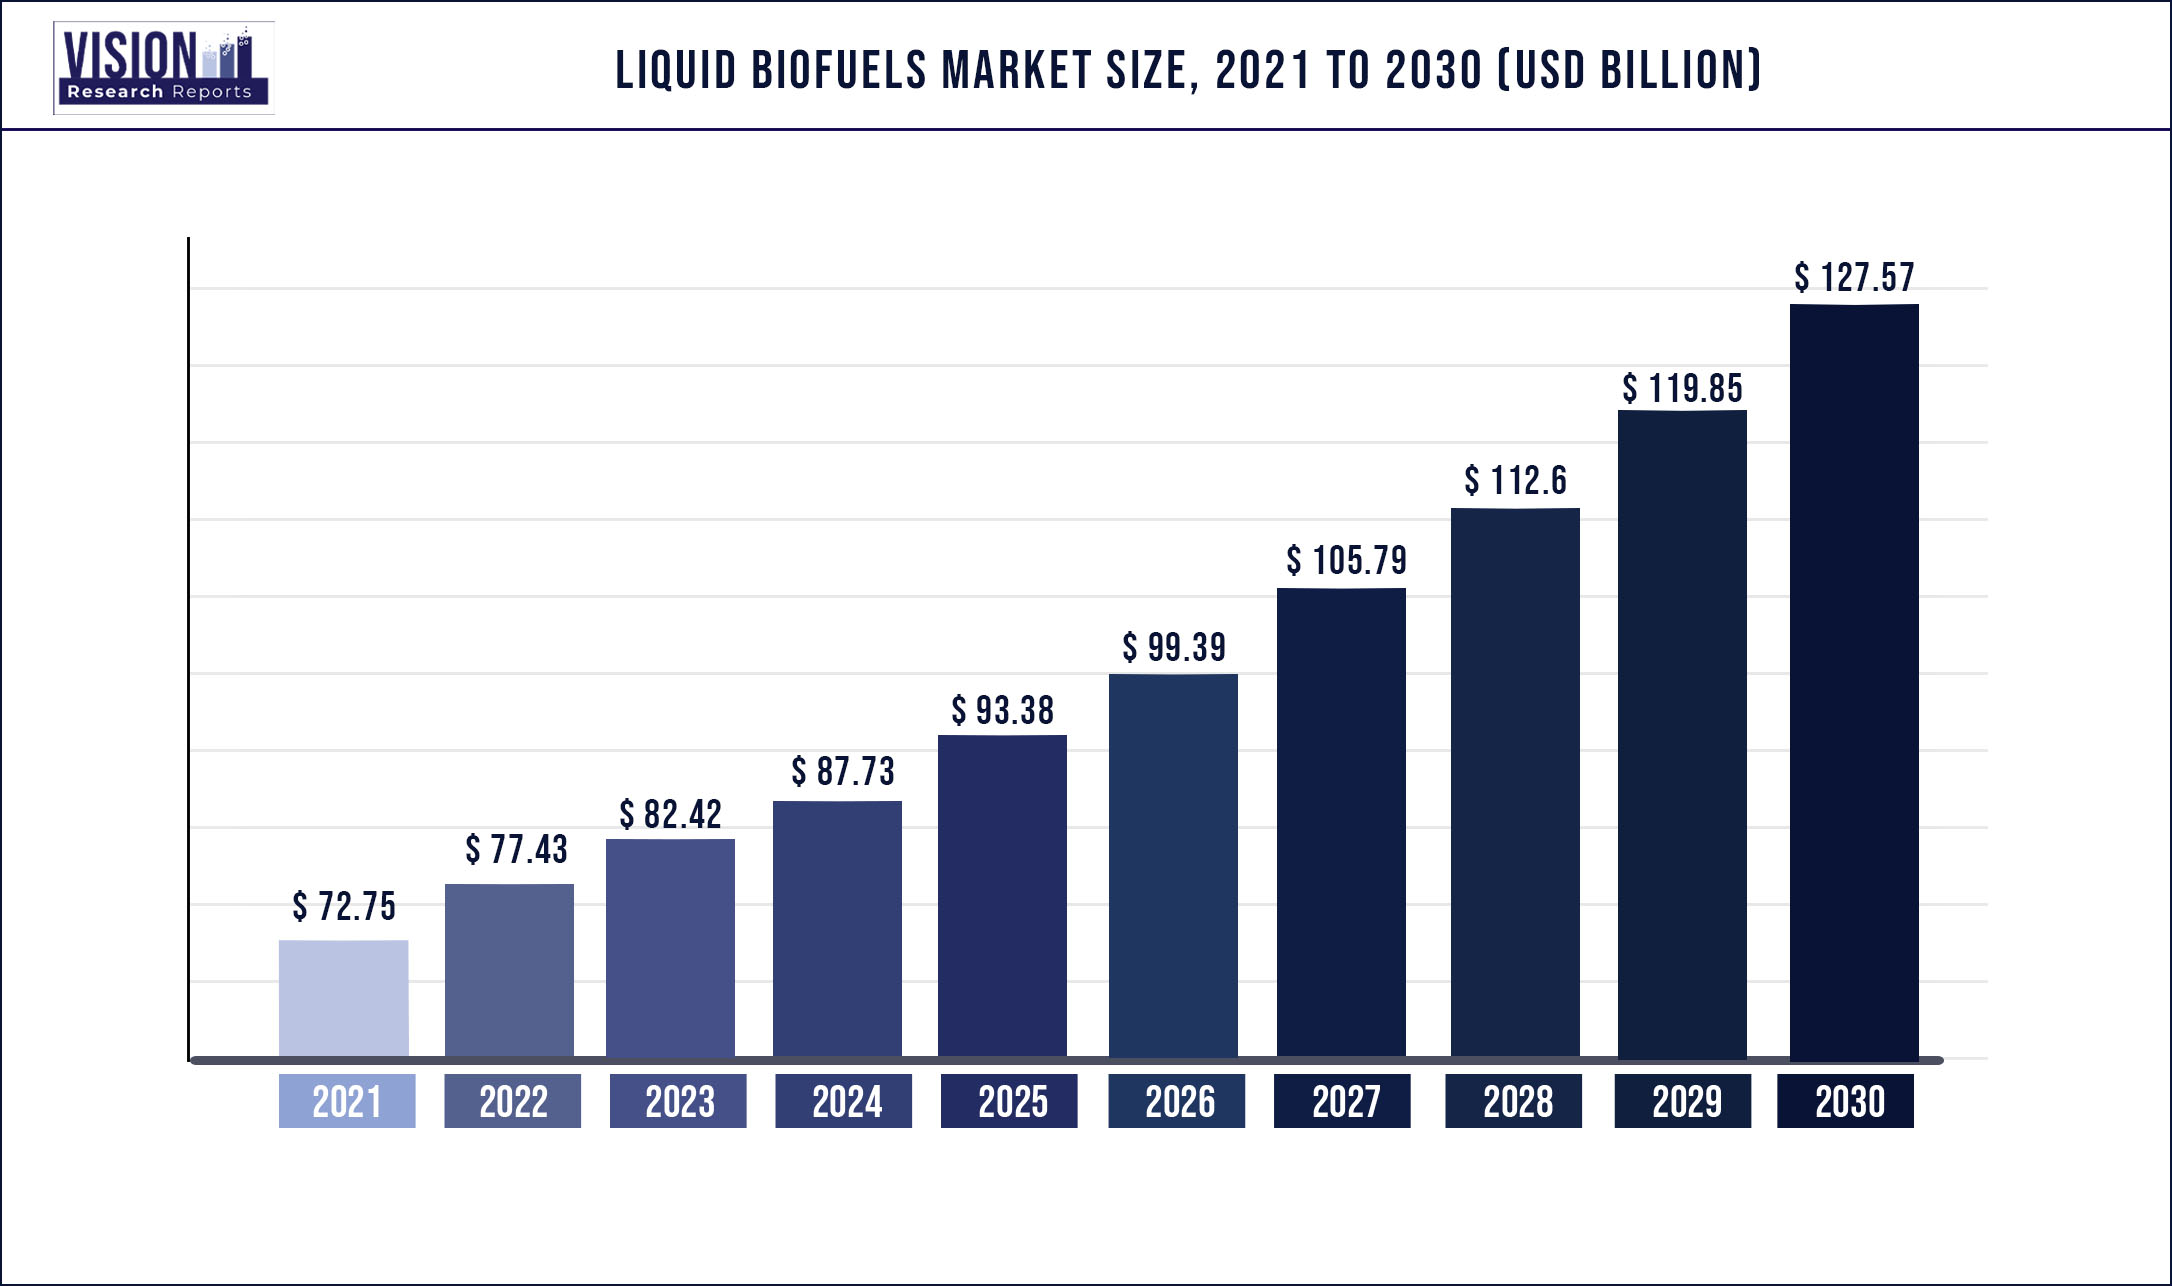 Liquid Biofuels Market Size 2021 to 2030